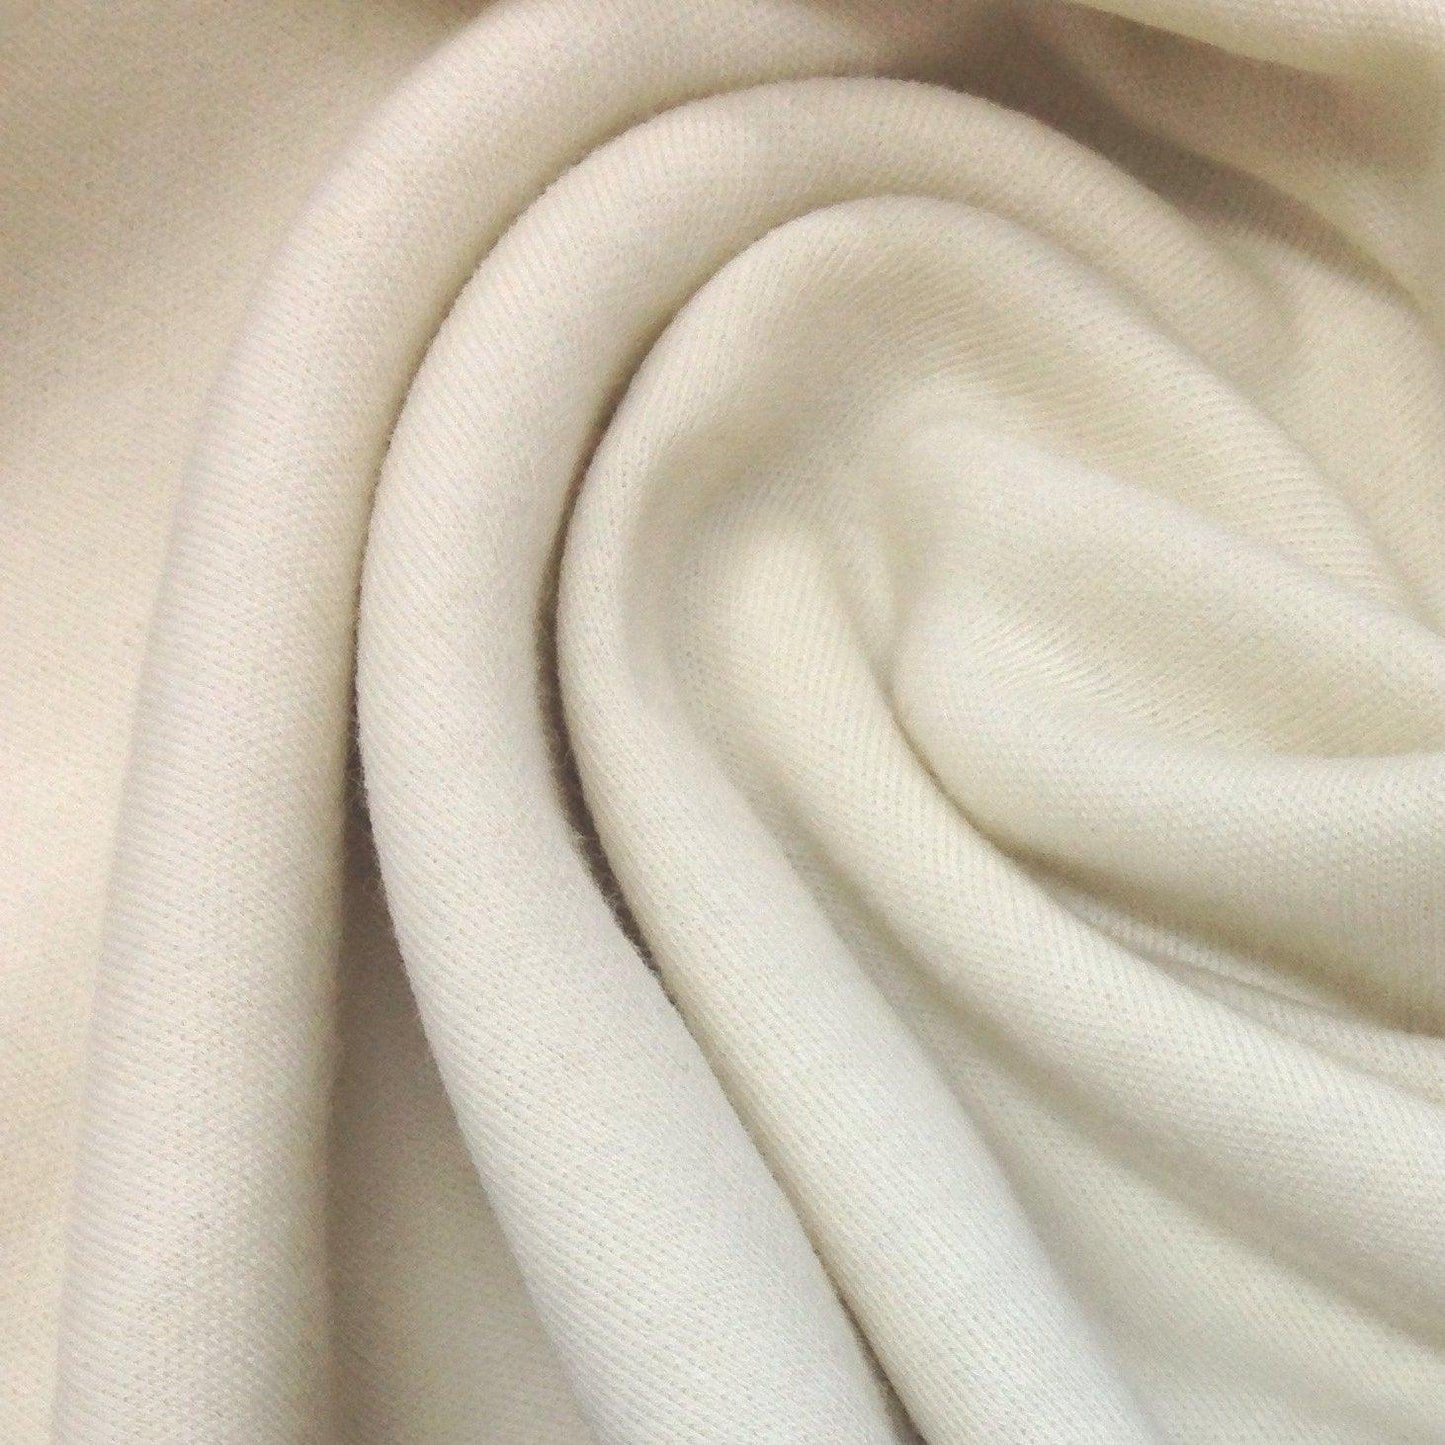 97% Organic Merino Wool/3% Spandex Interlock Blend Fabric - Feltable, $35.56/yd, Rolls - Nature's Fabrics